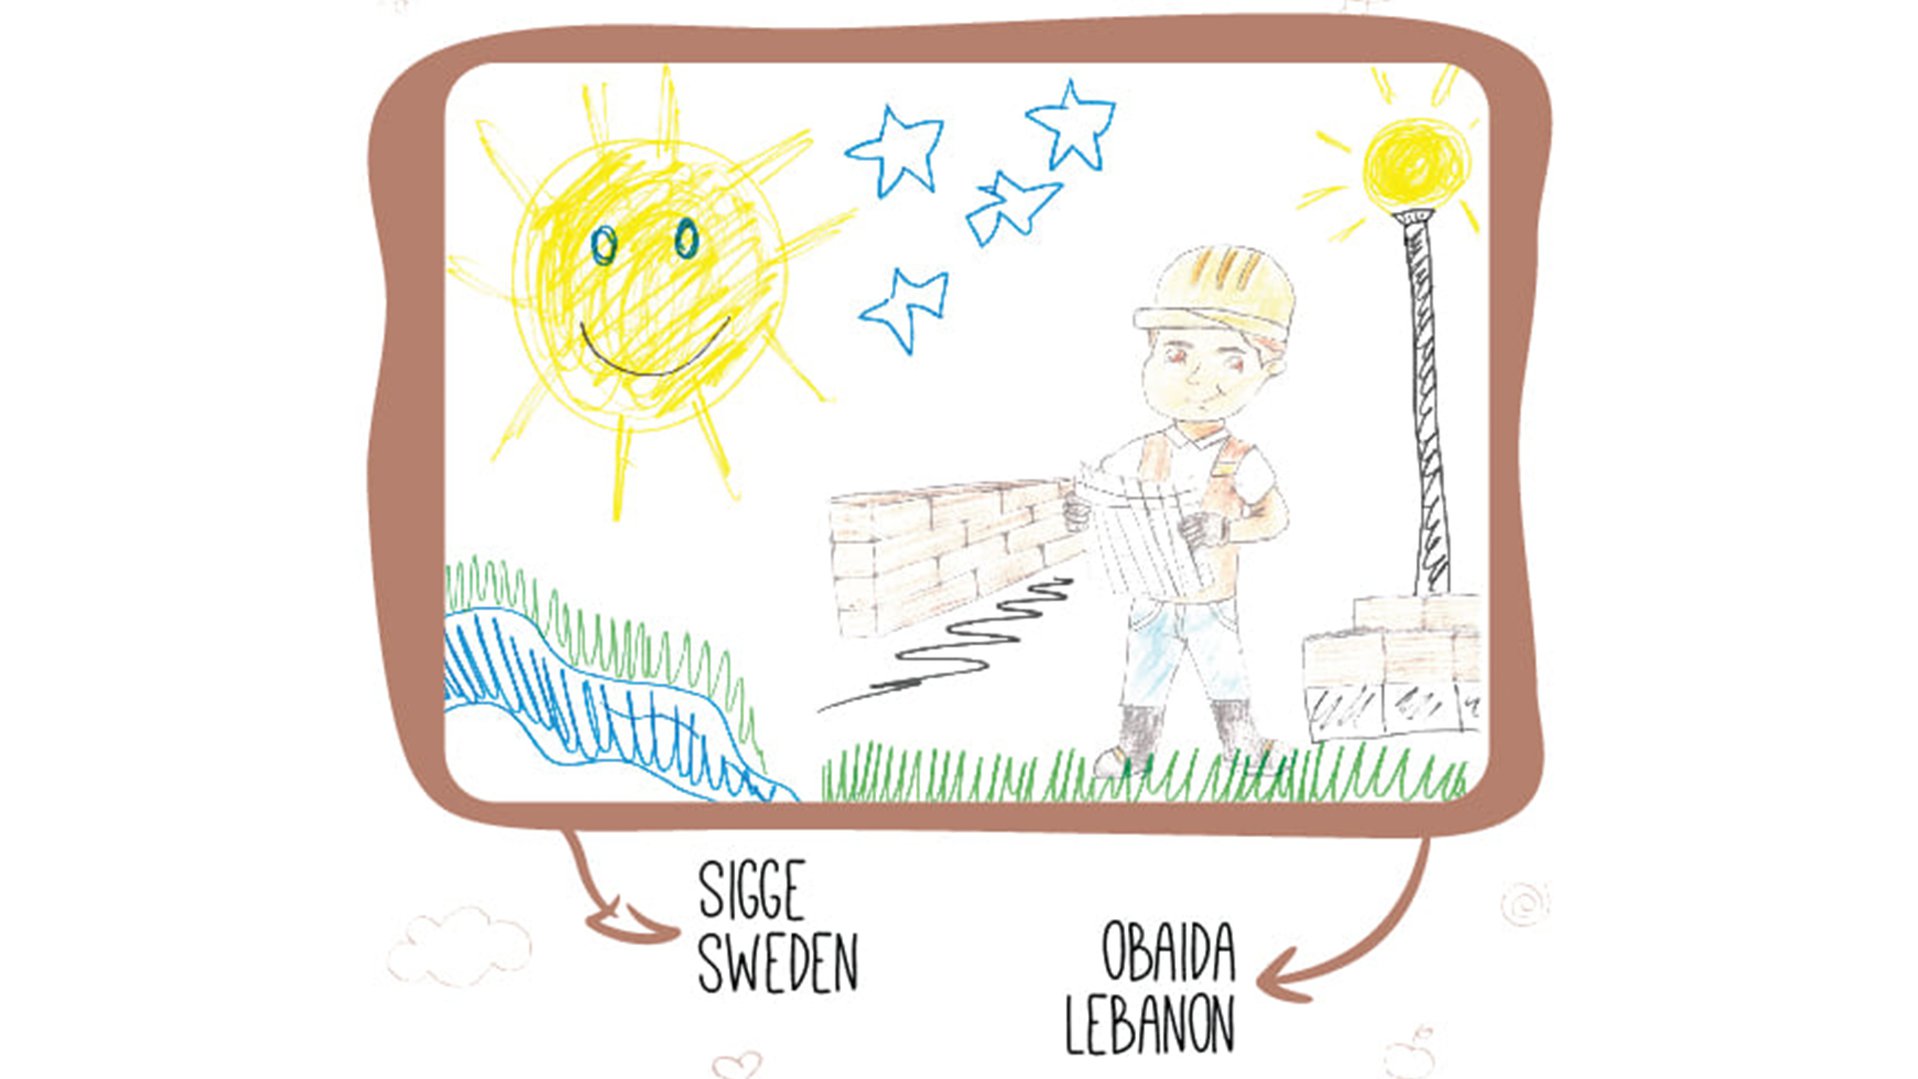 Peace of Art - Project - War Child Zweden en War Child Libanon